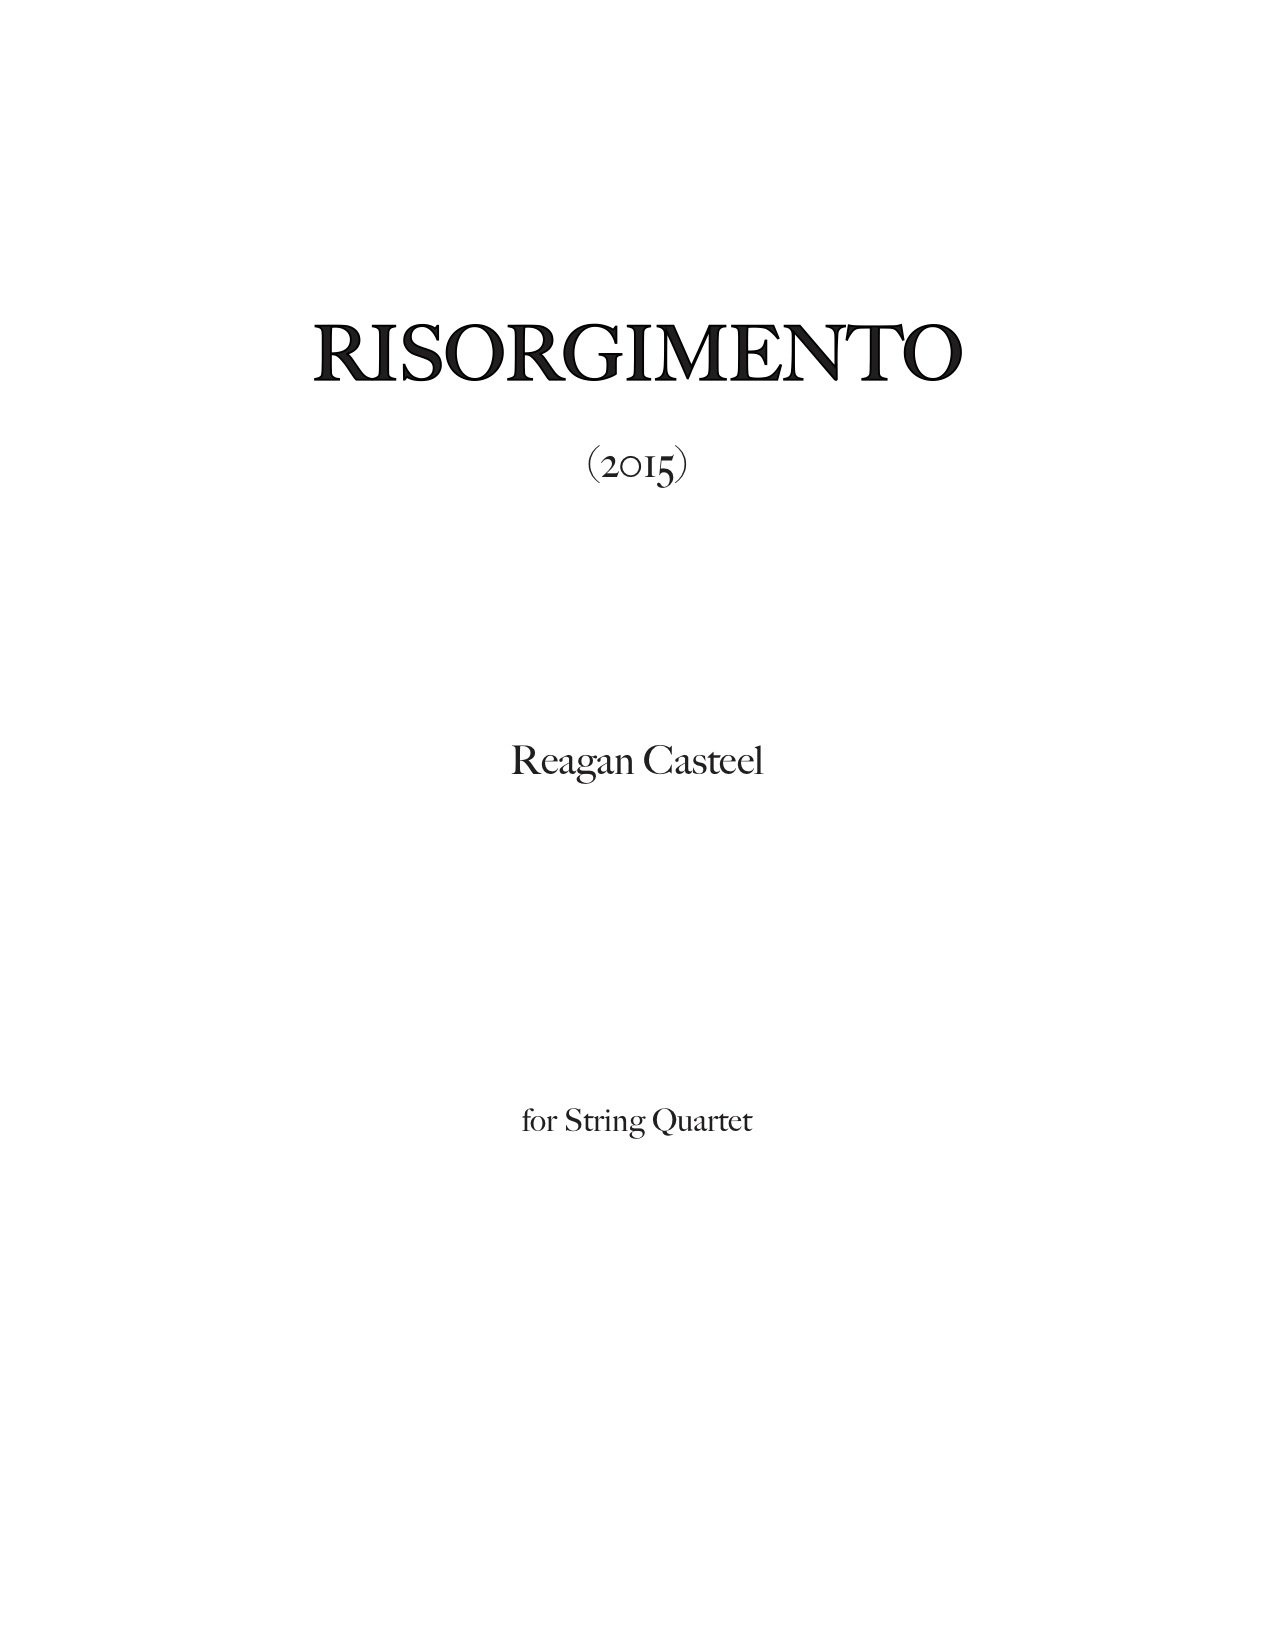 Risorgimento Full Score and Parts copy (dragged).jpg